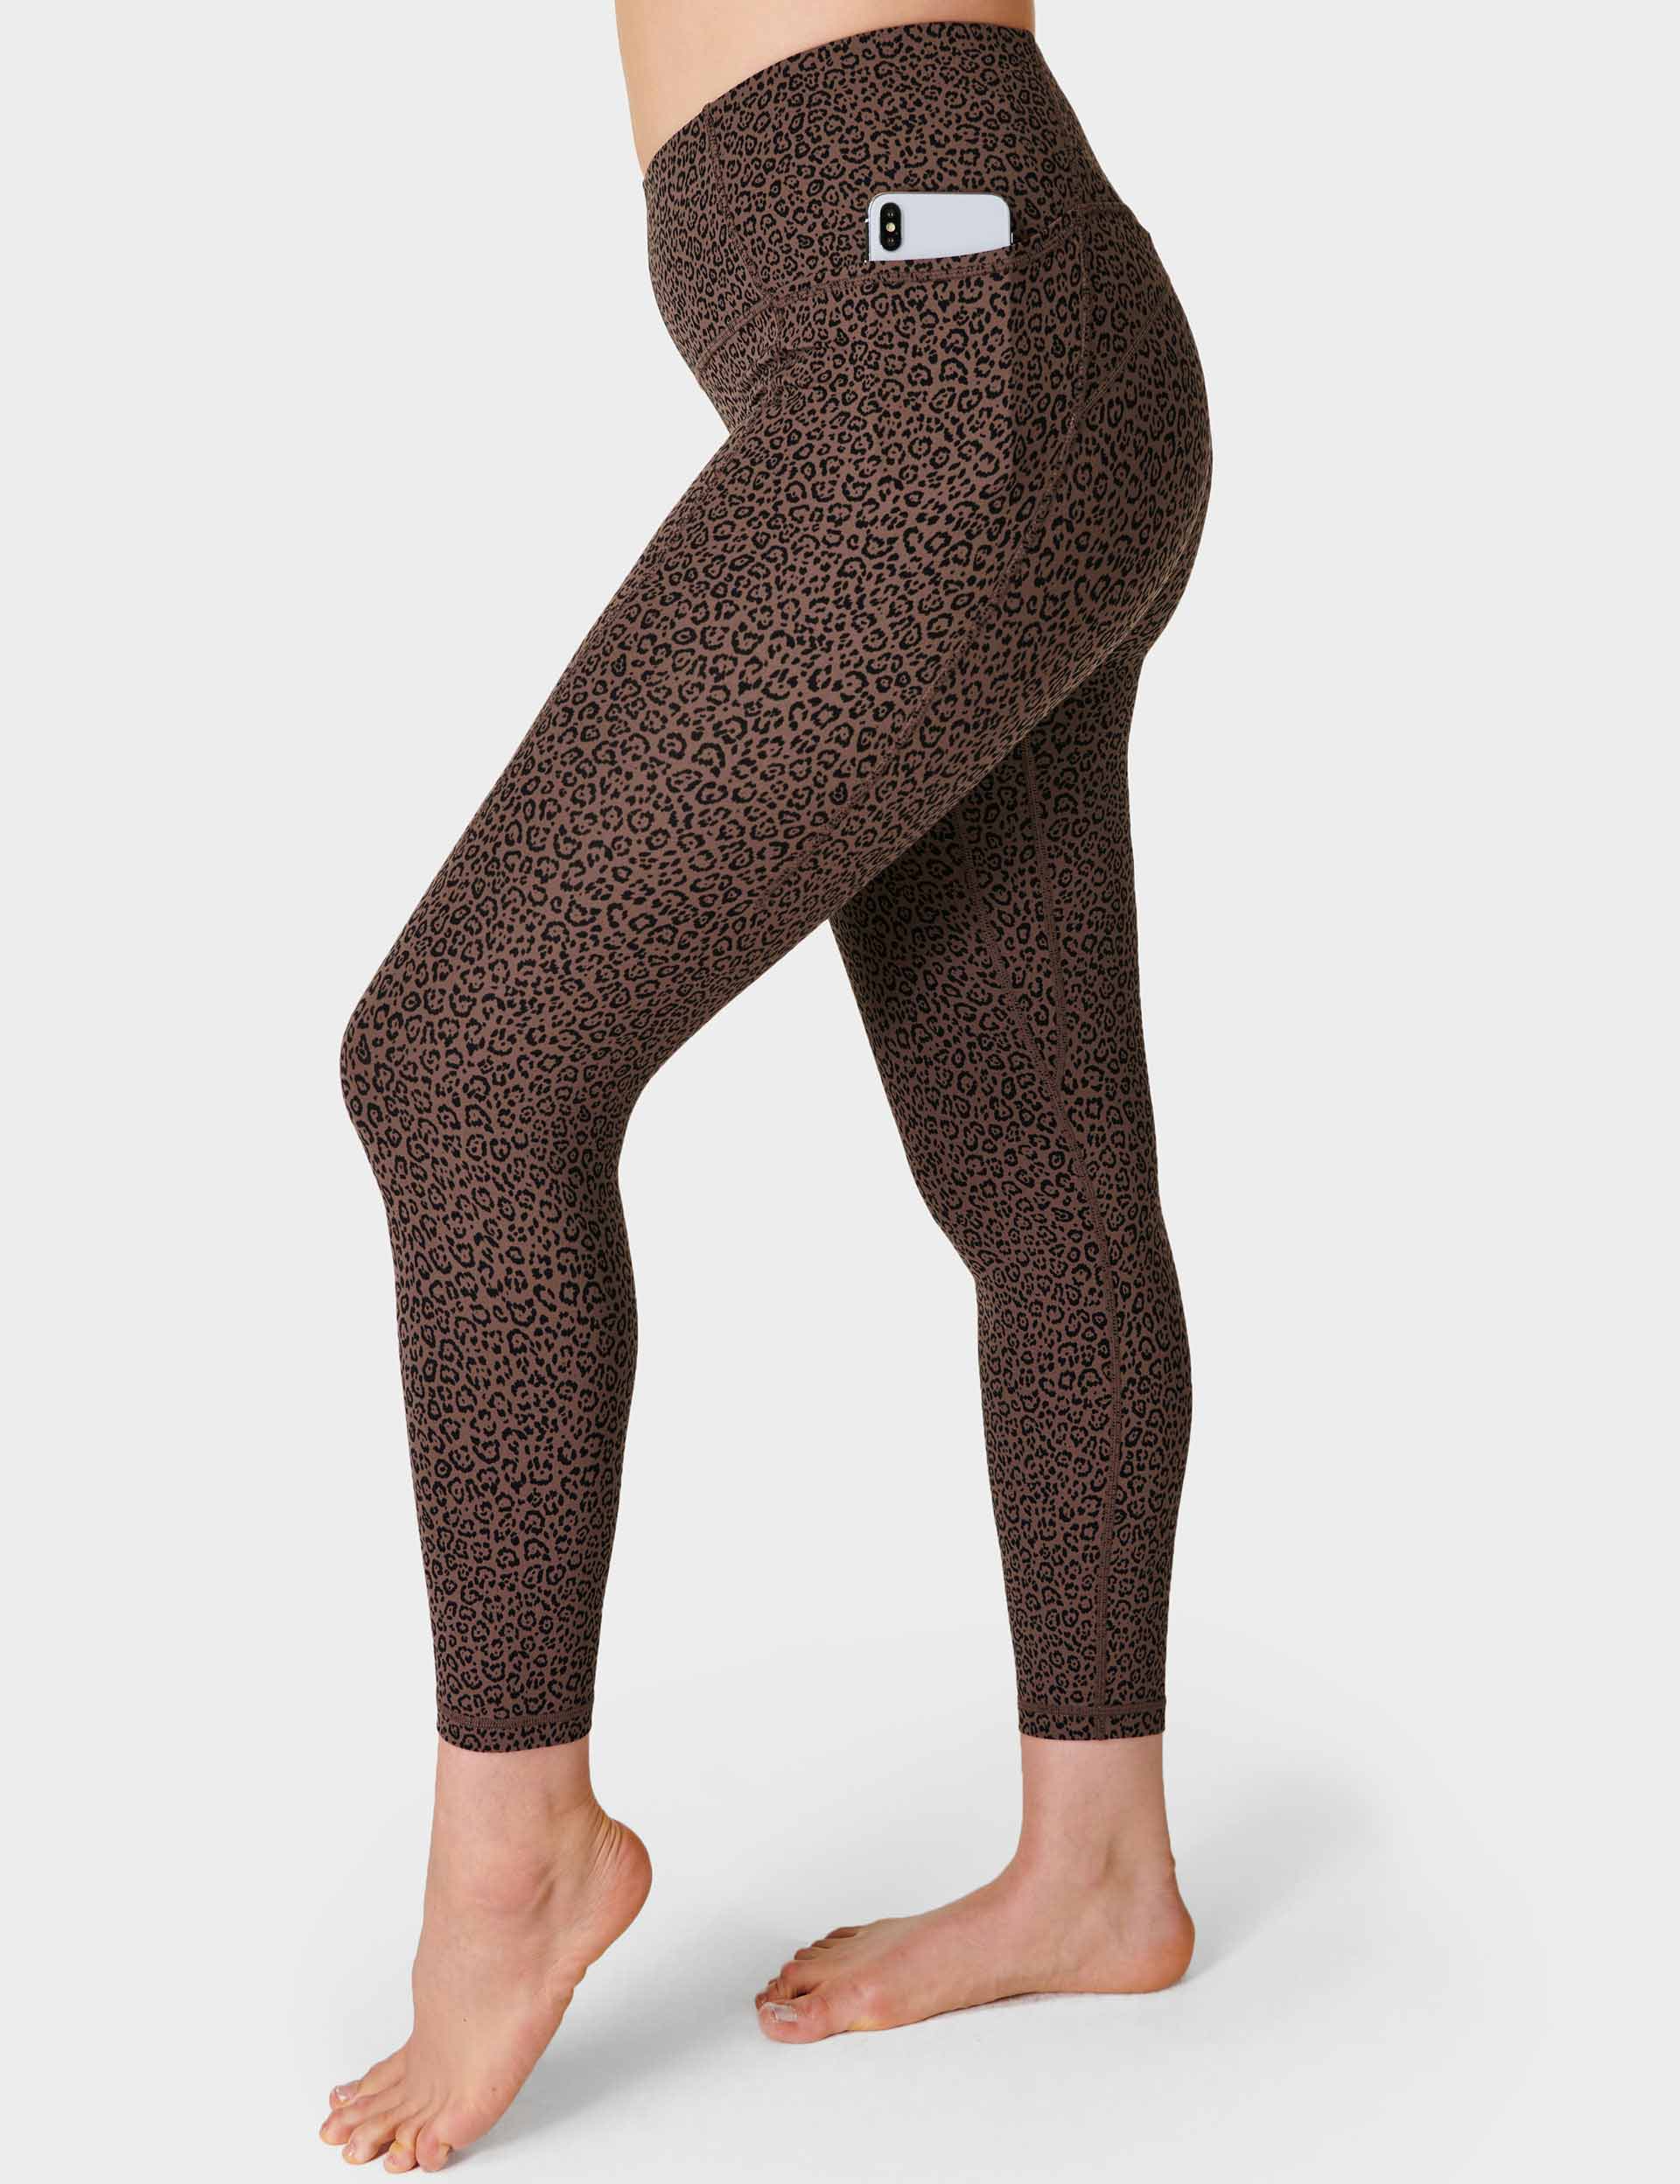 Luxe Scrunch Bum Pocket Leggings - Leopard Print | Avvini Athletica